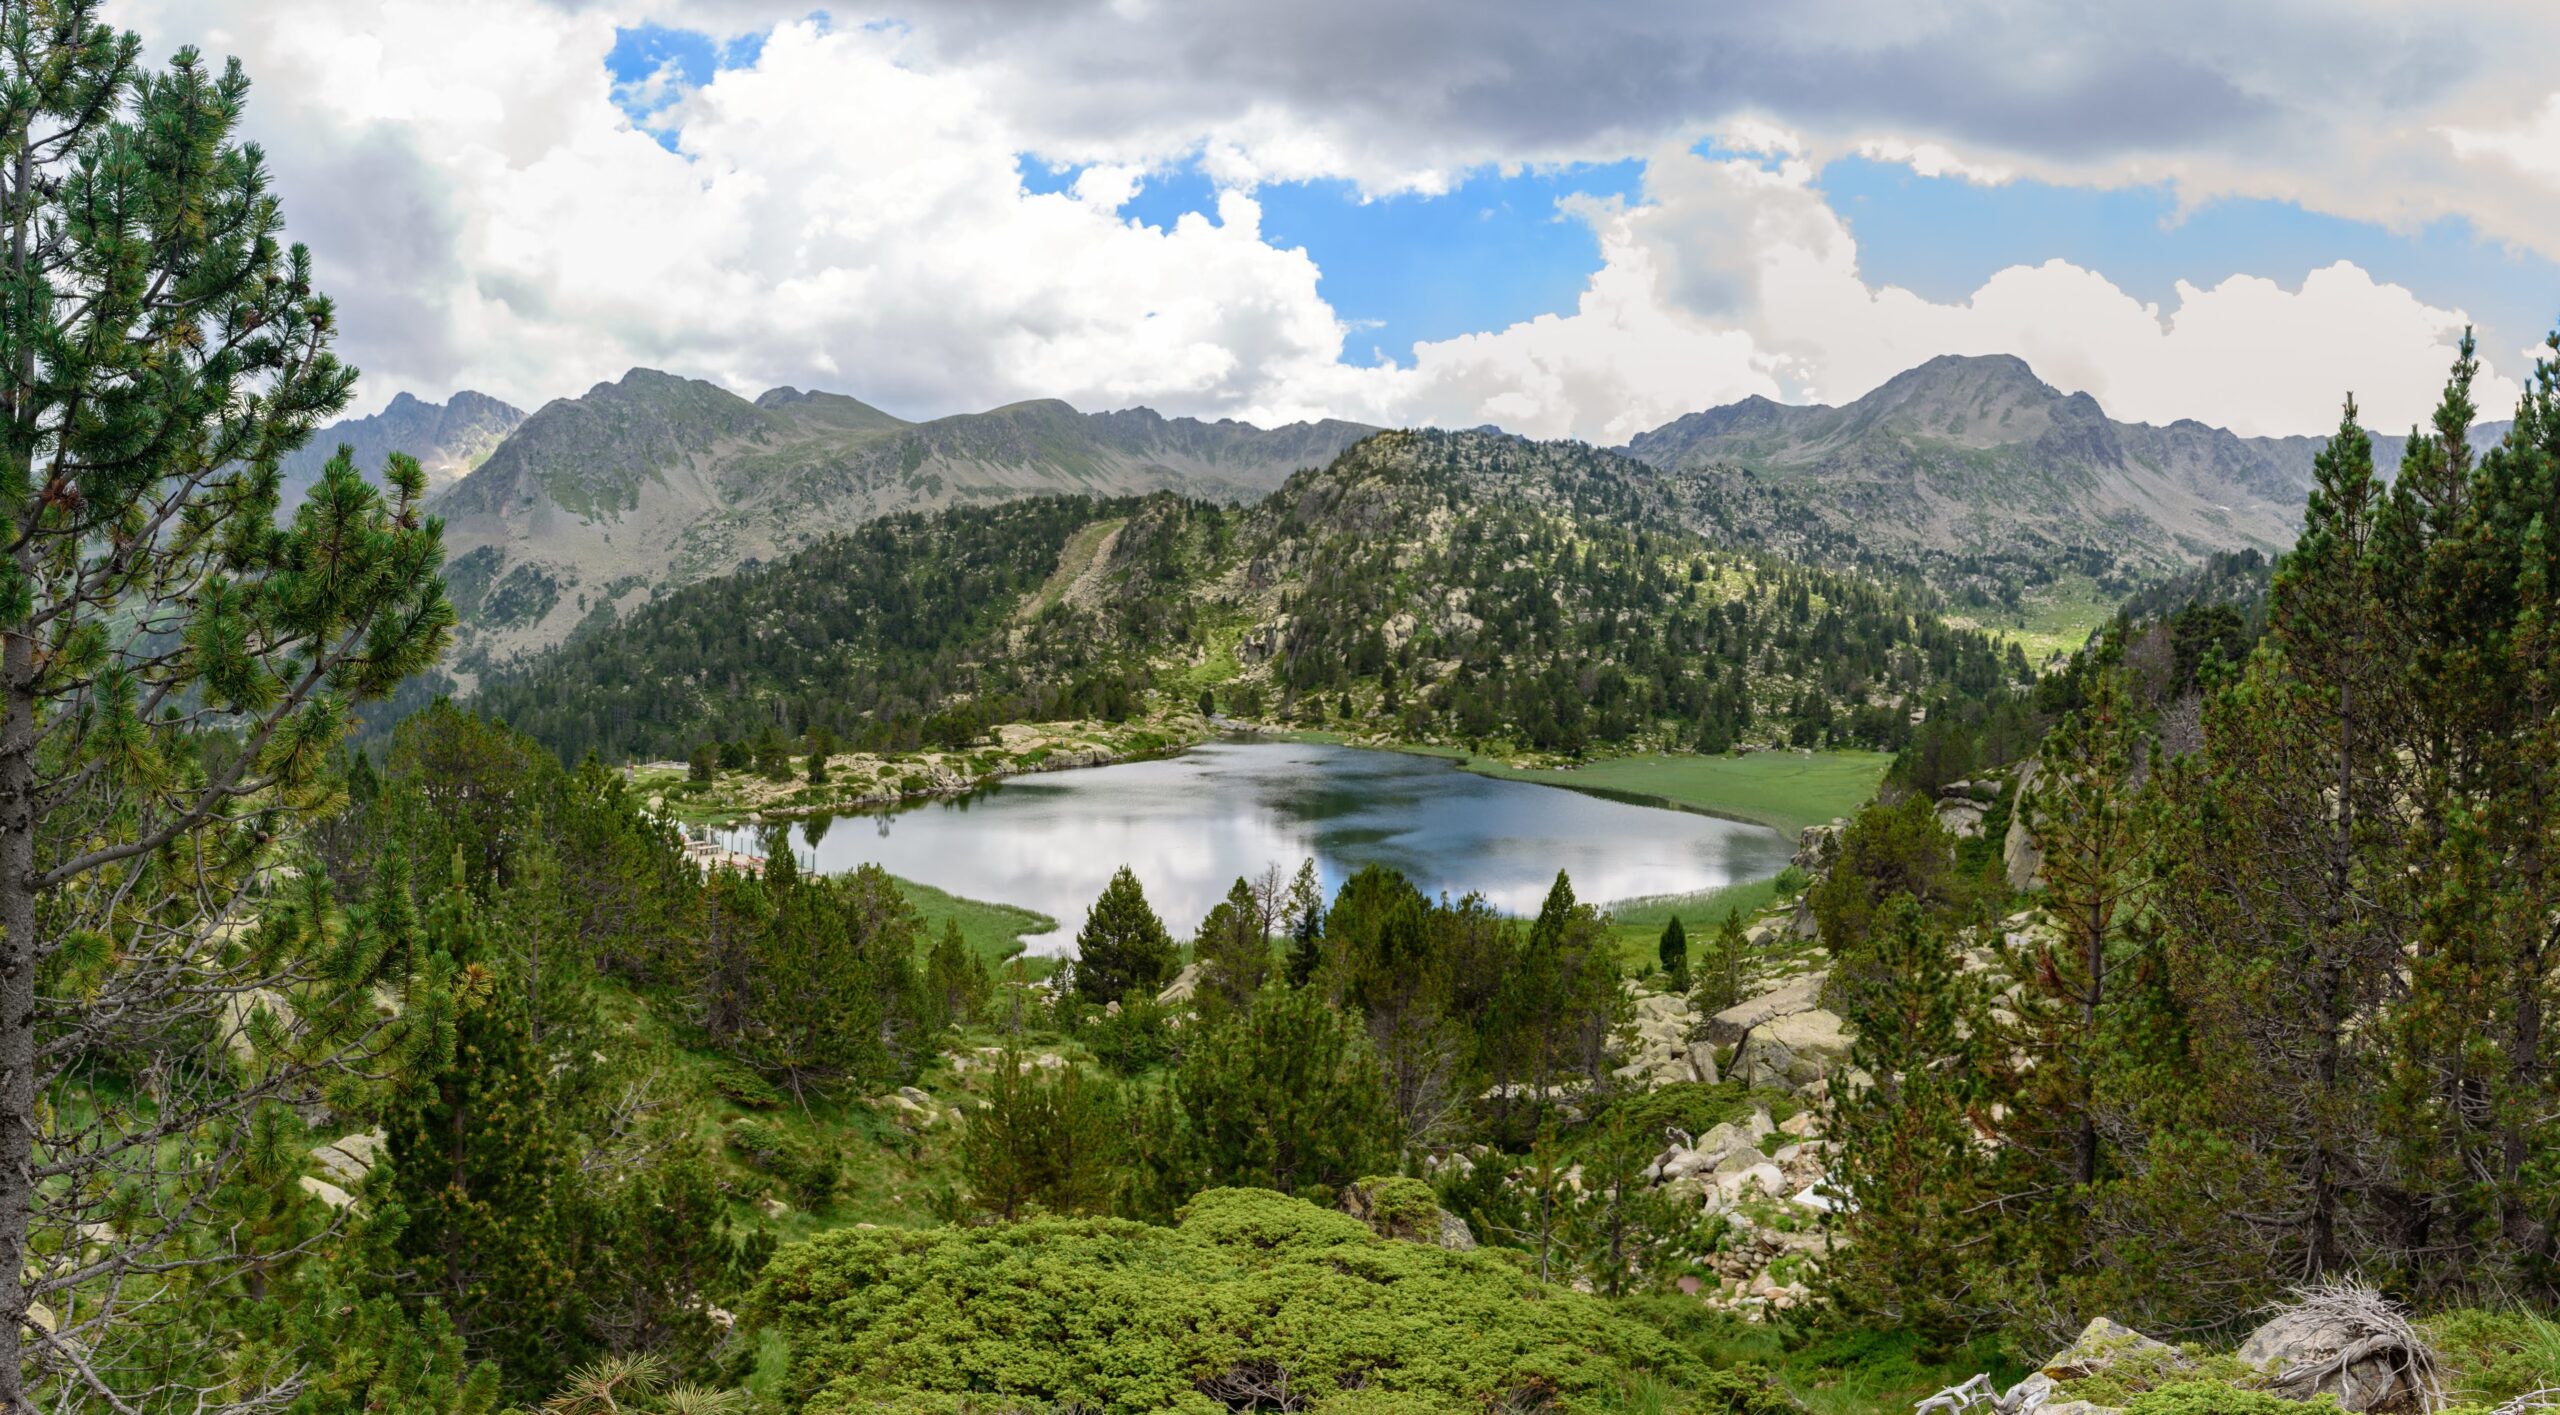 Lake Pessons in Grau Roig, Encamp, Andorra